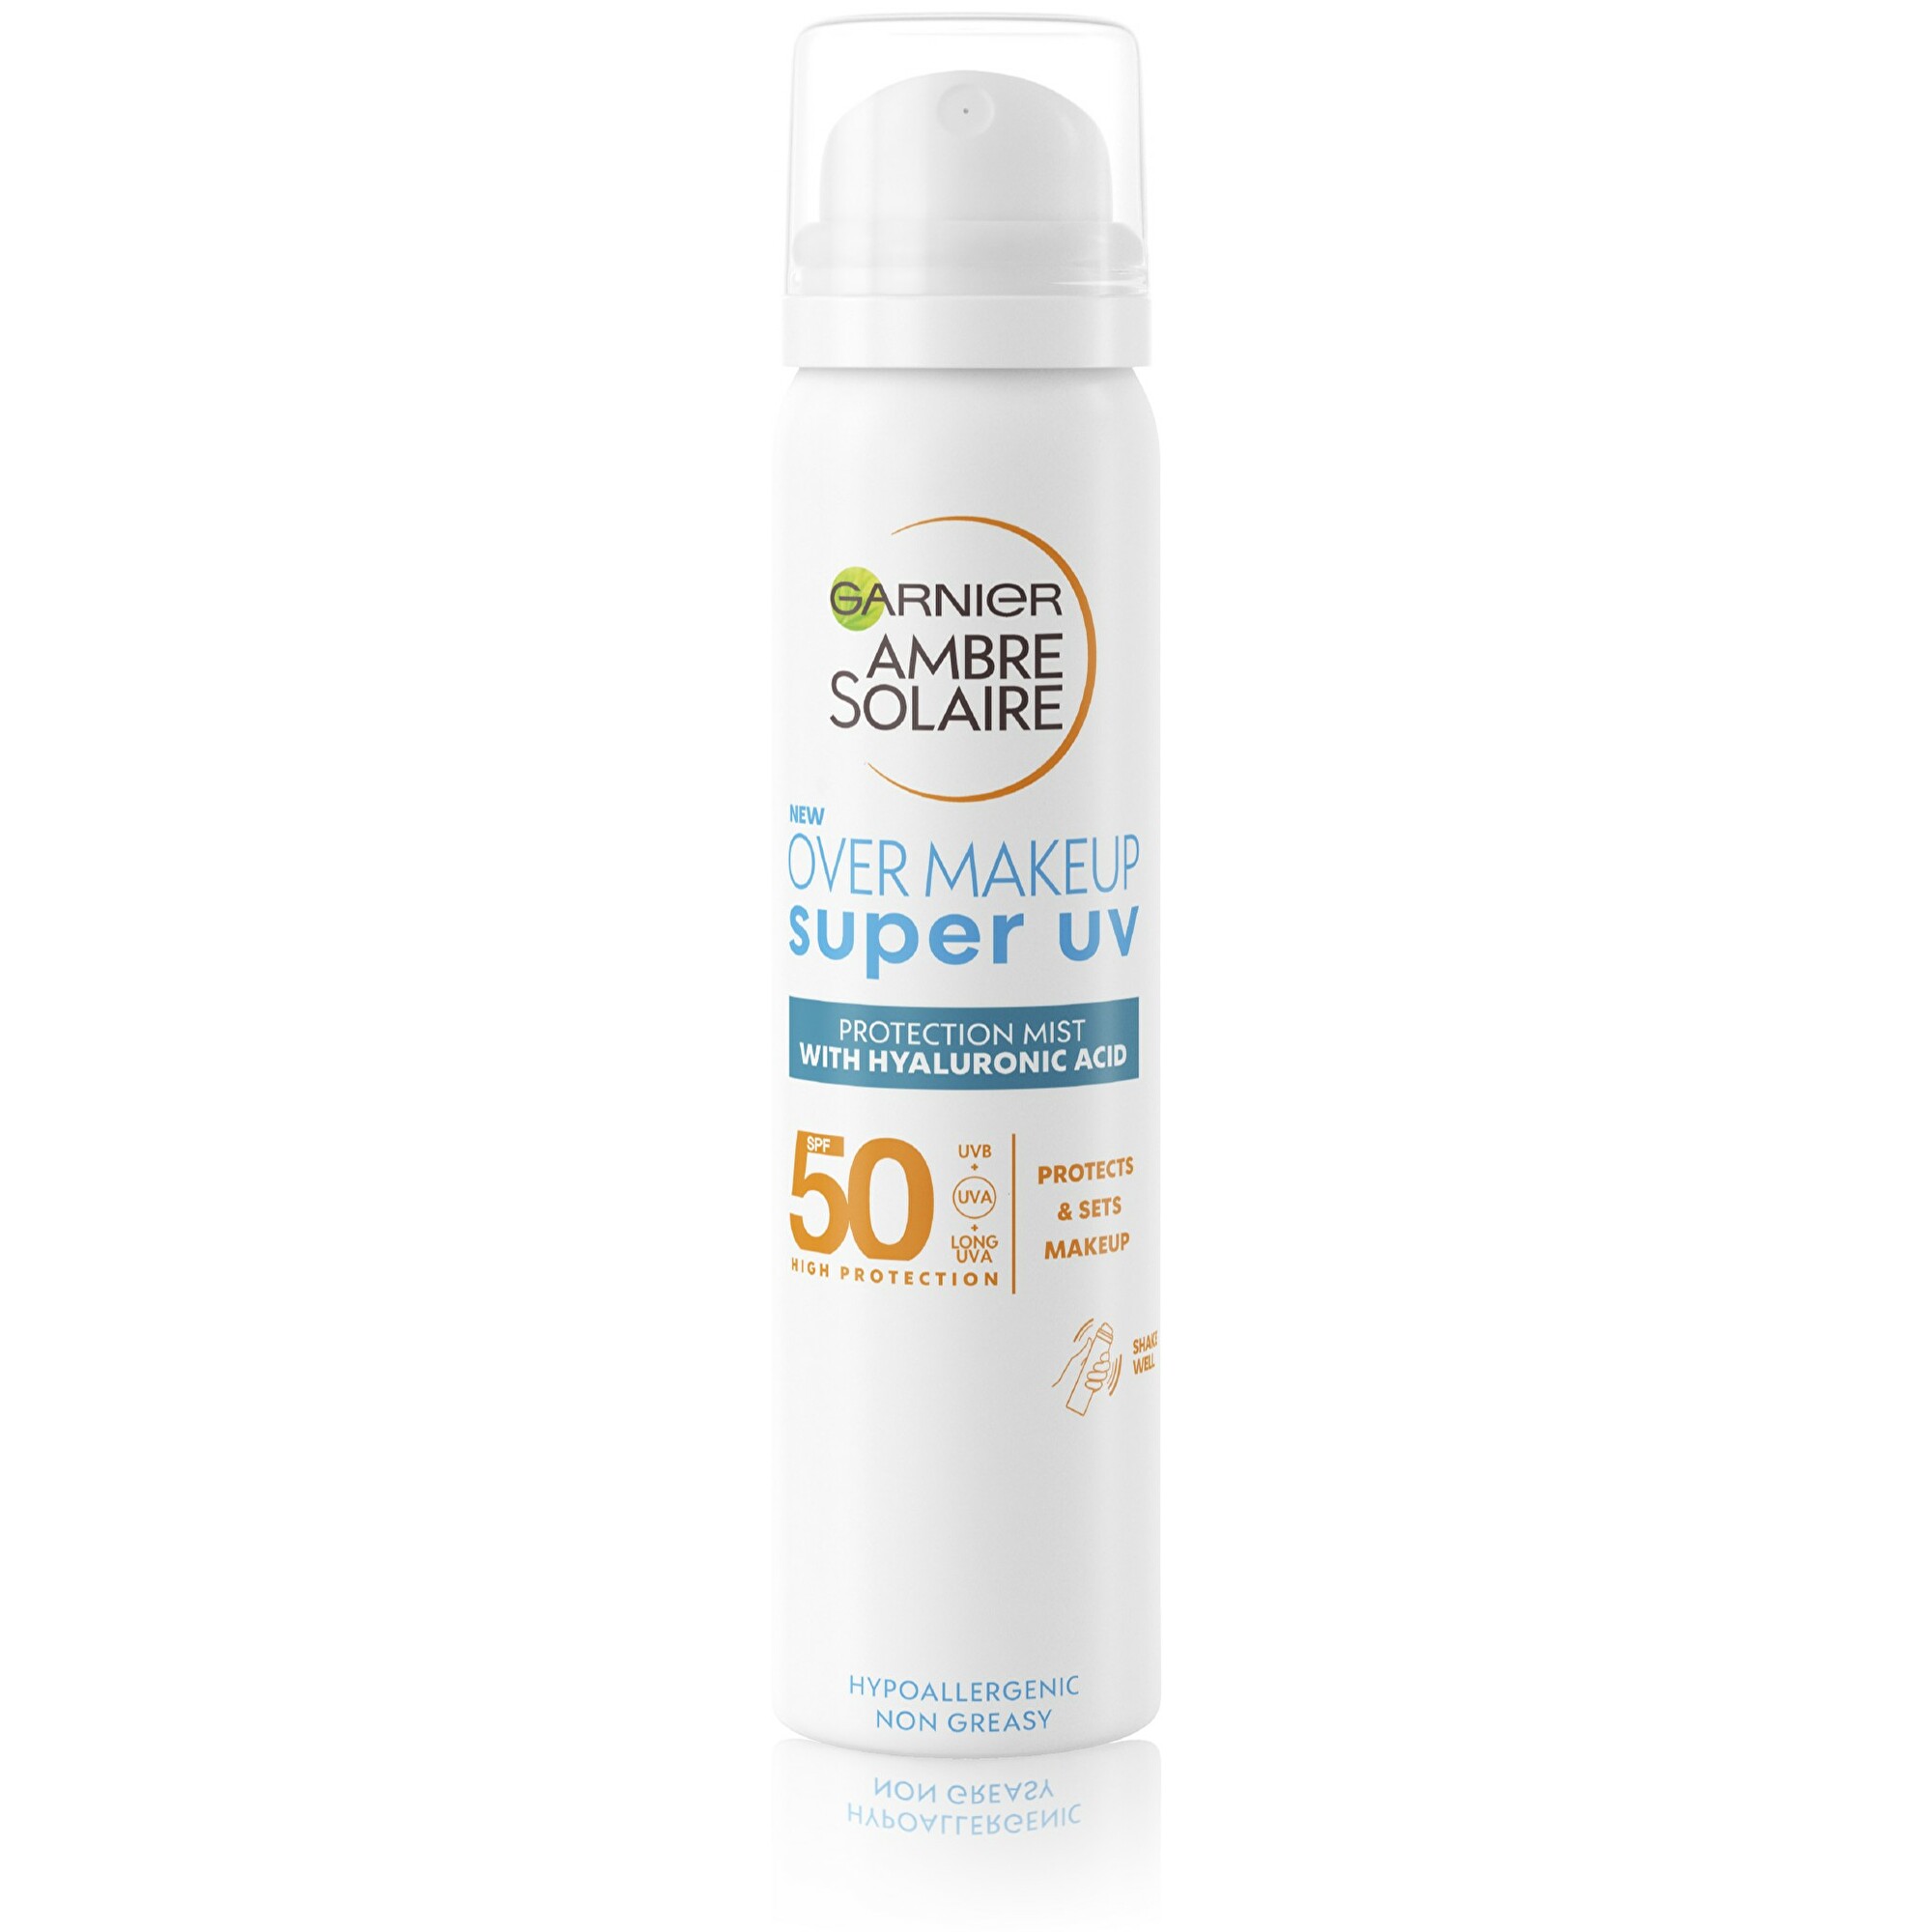 Garnier Ochranná pleťová hmla SPF 50 Over Make-up (Protection Mist) 75 ml